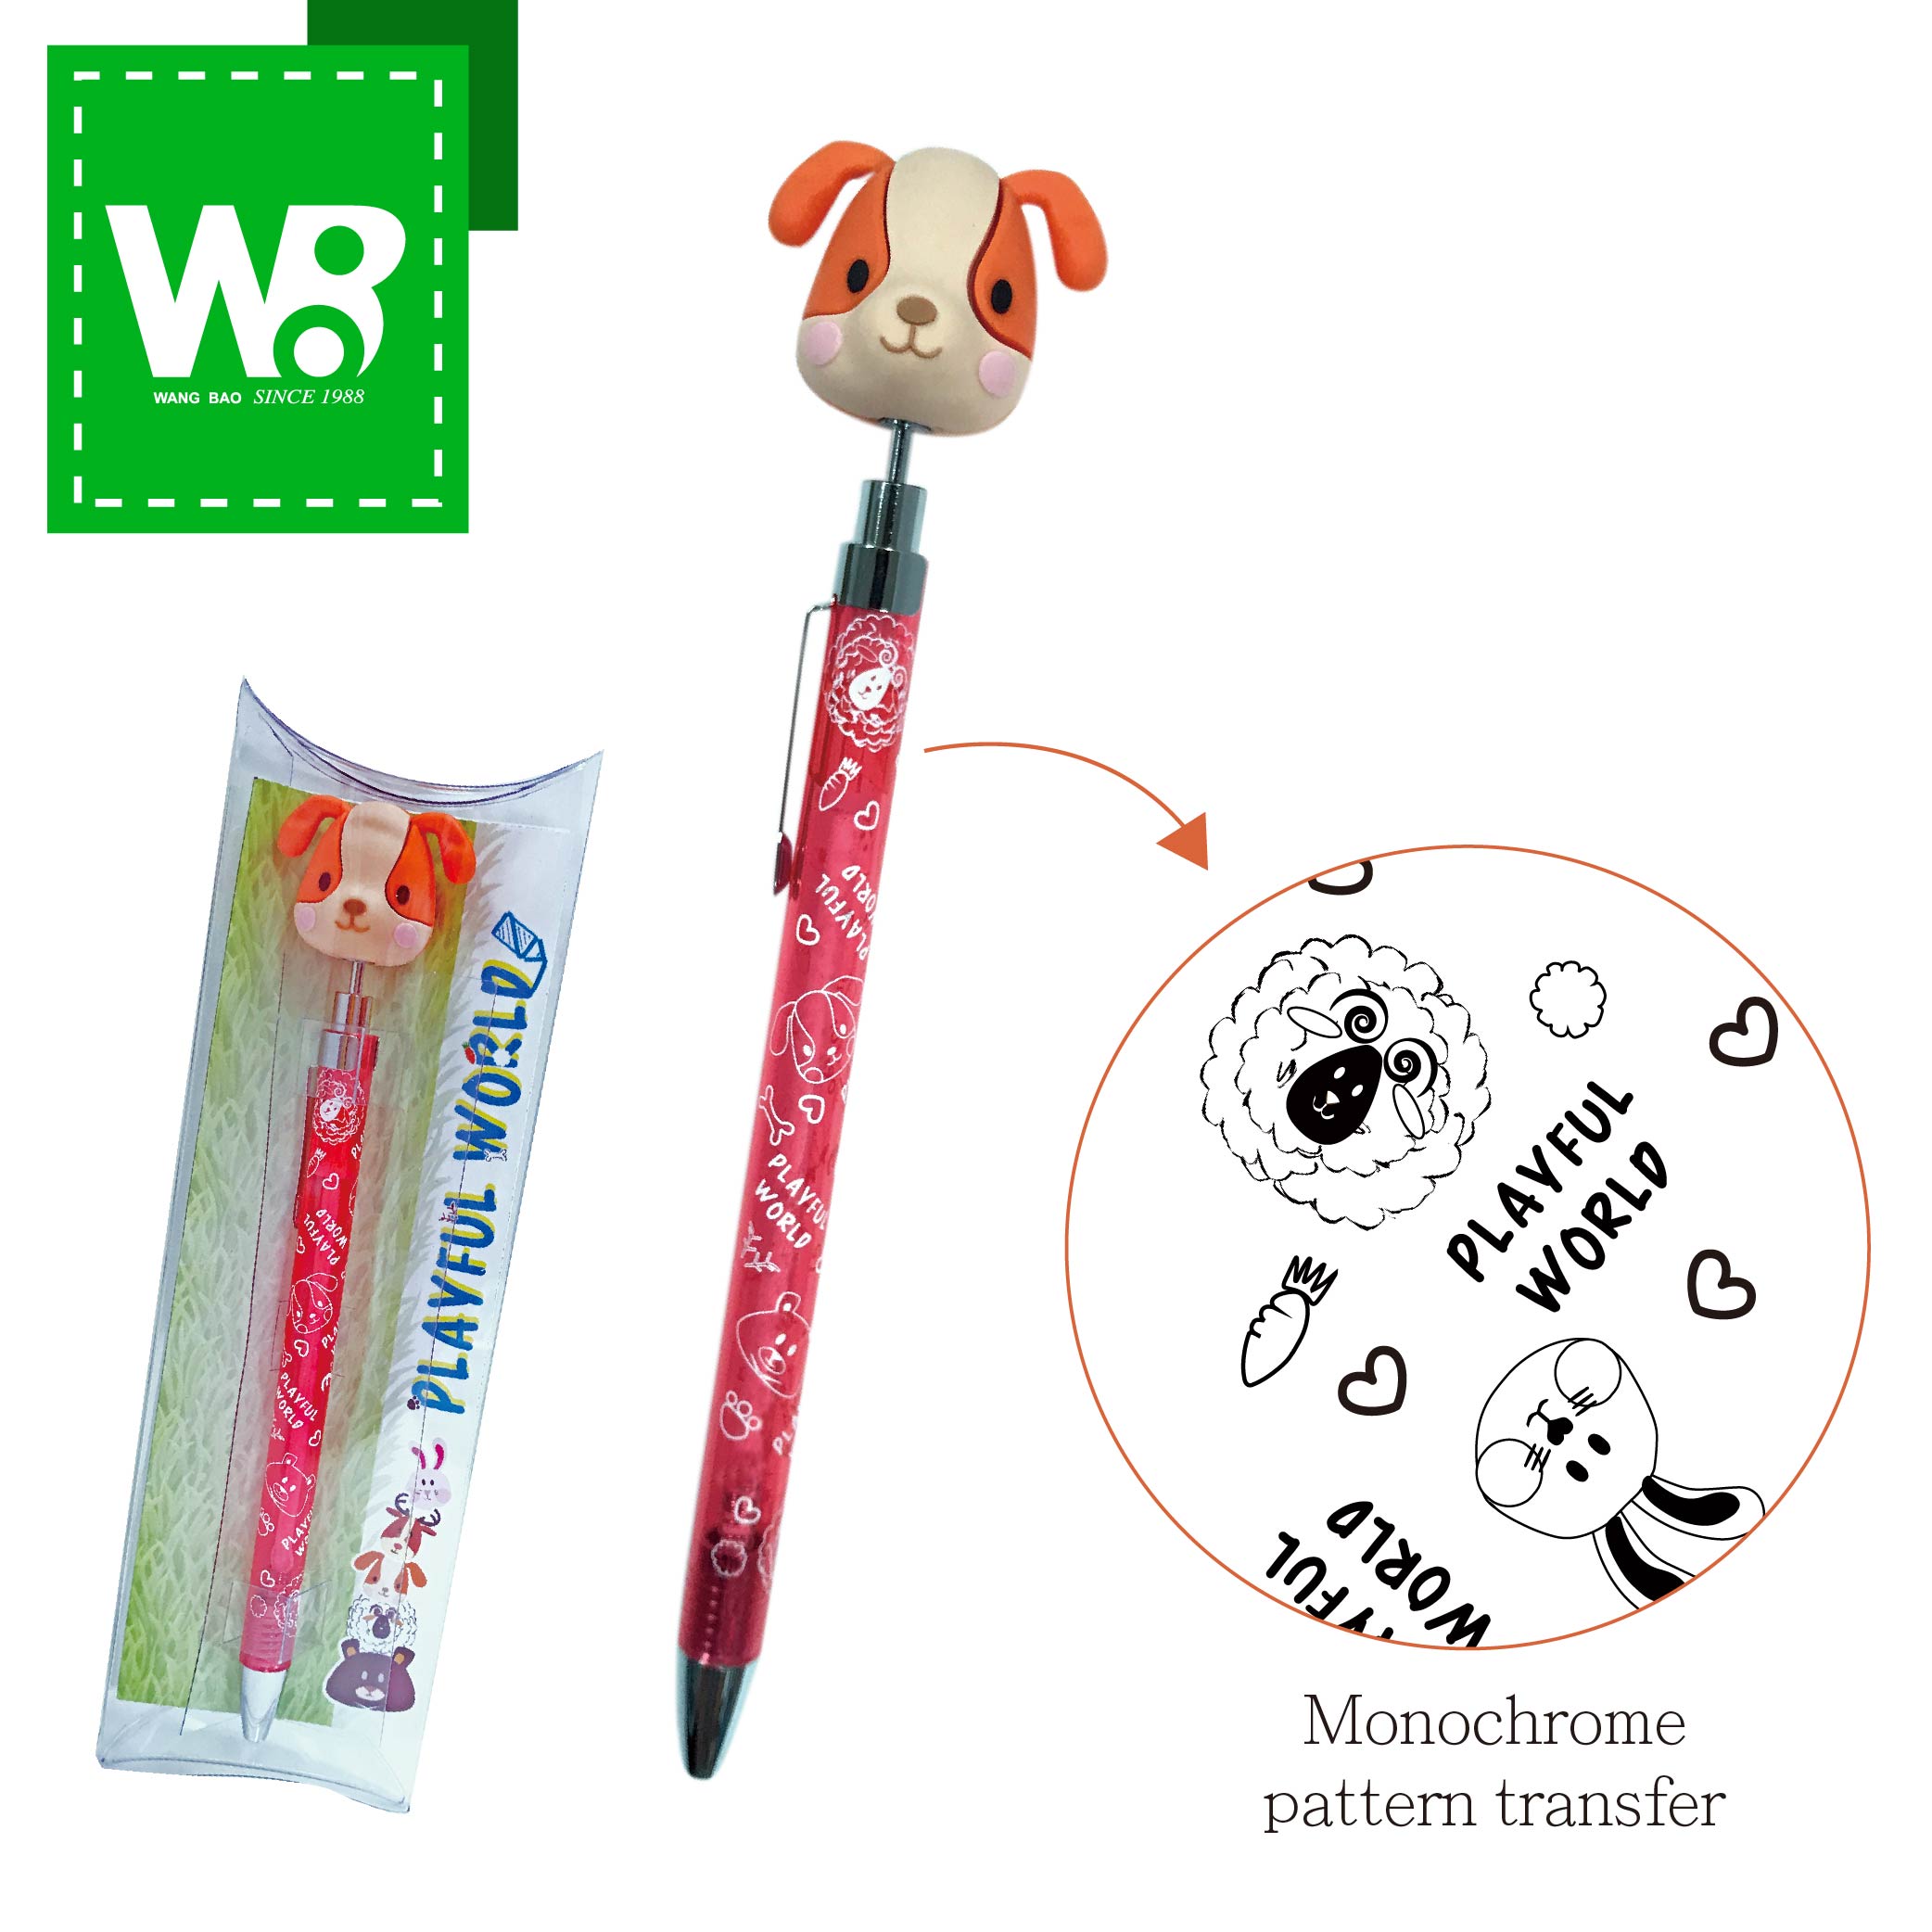 Ballpoint-pen with cute animal figure on top